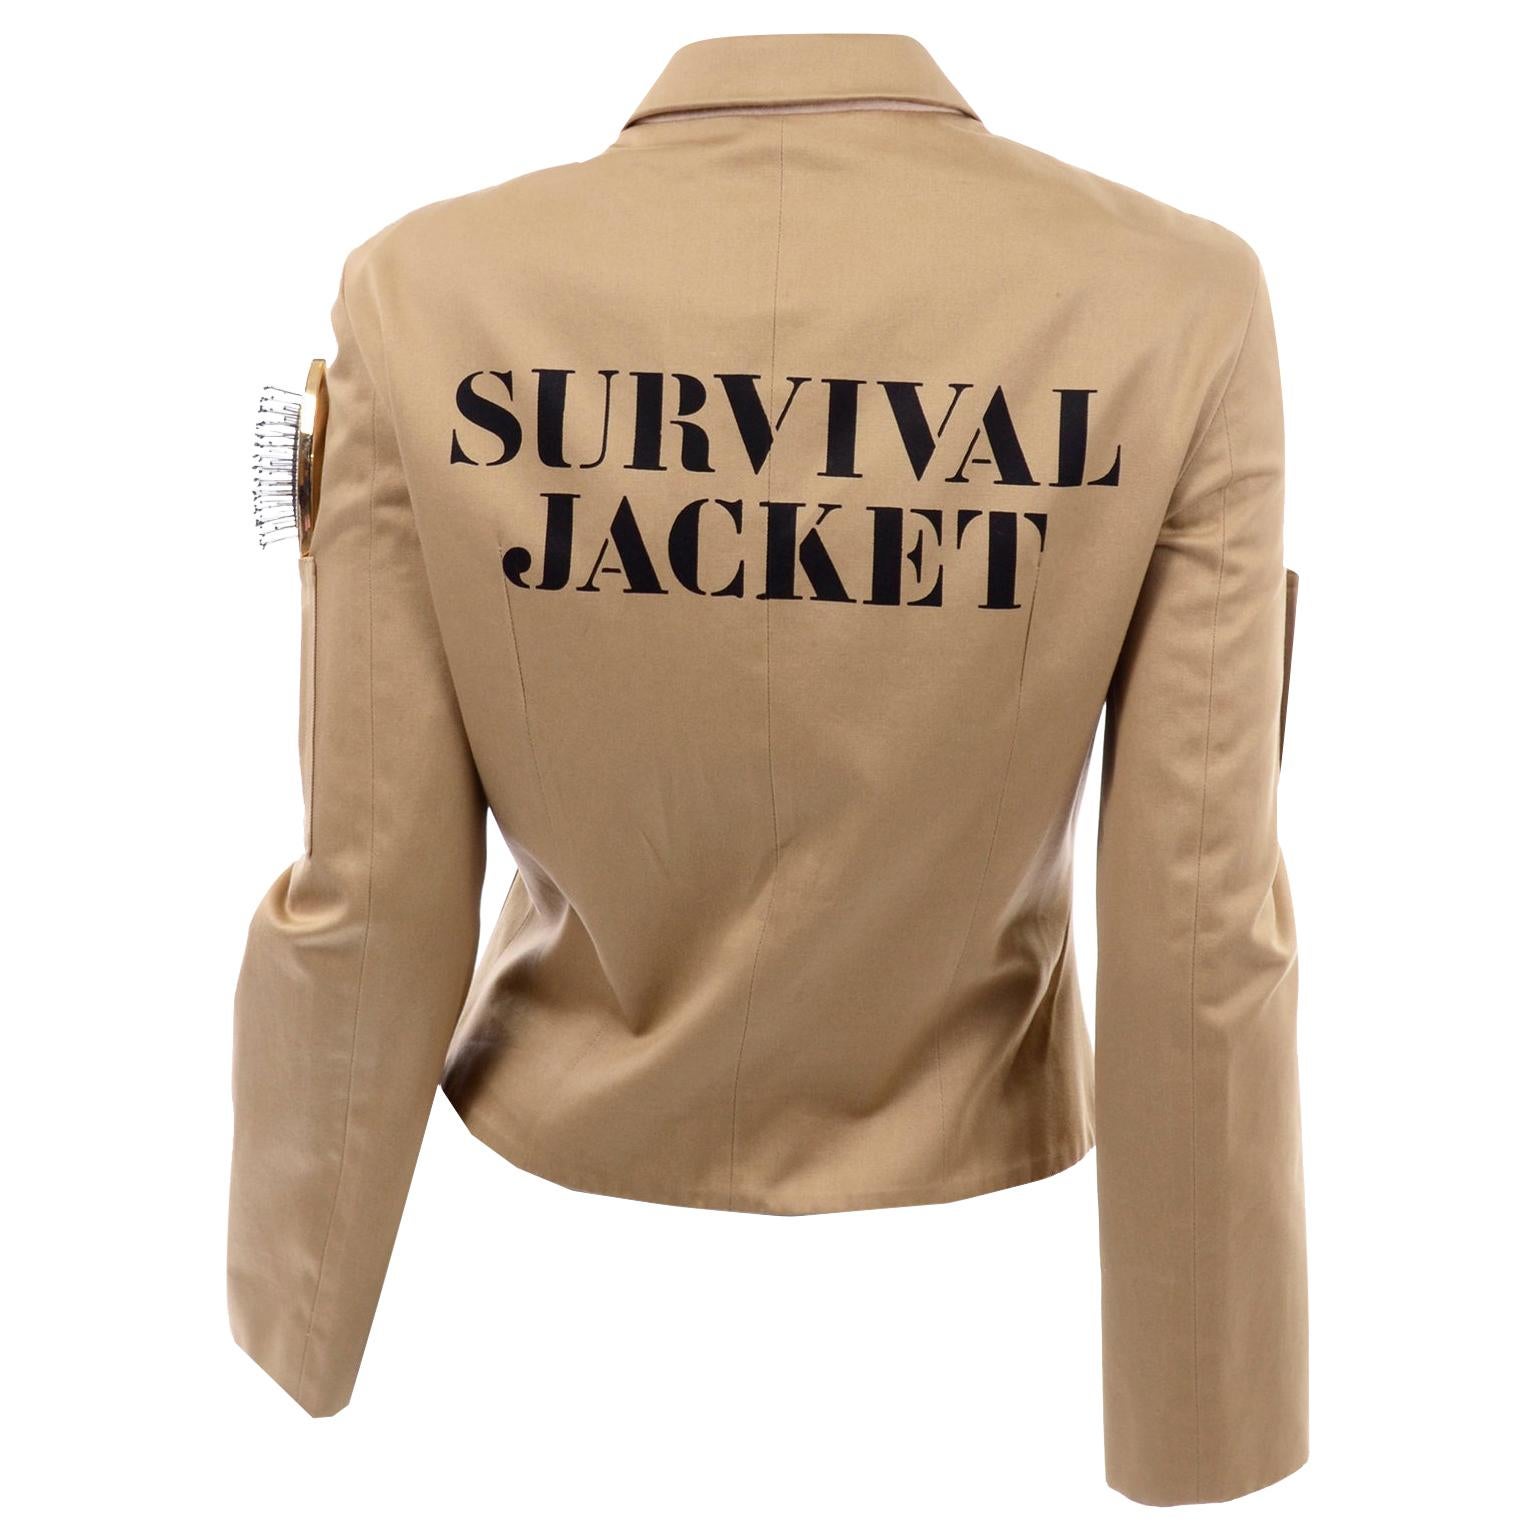 1991 Franco Moschino Couture Survival Jacket in Khaki Cotton Urban Jungle Tools